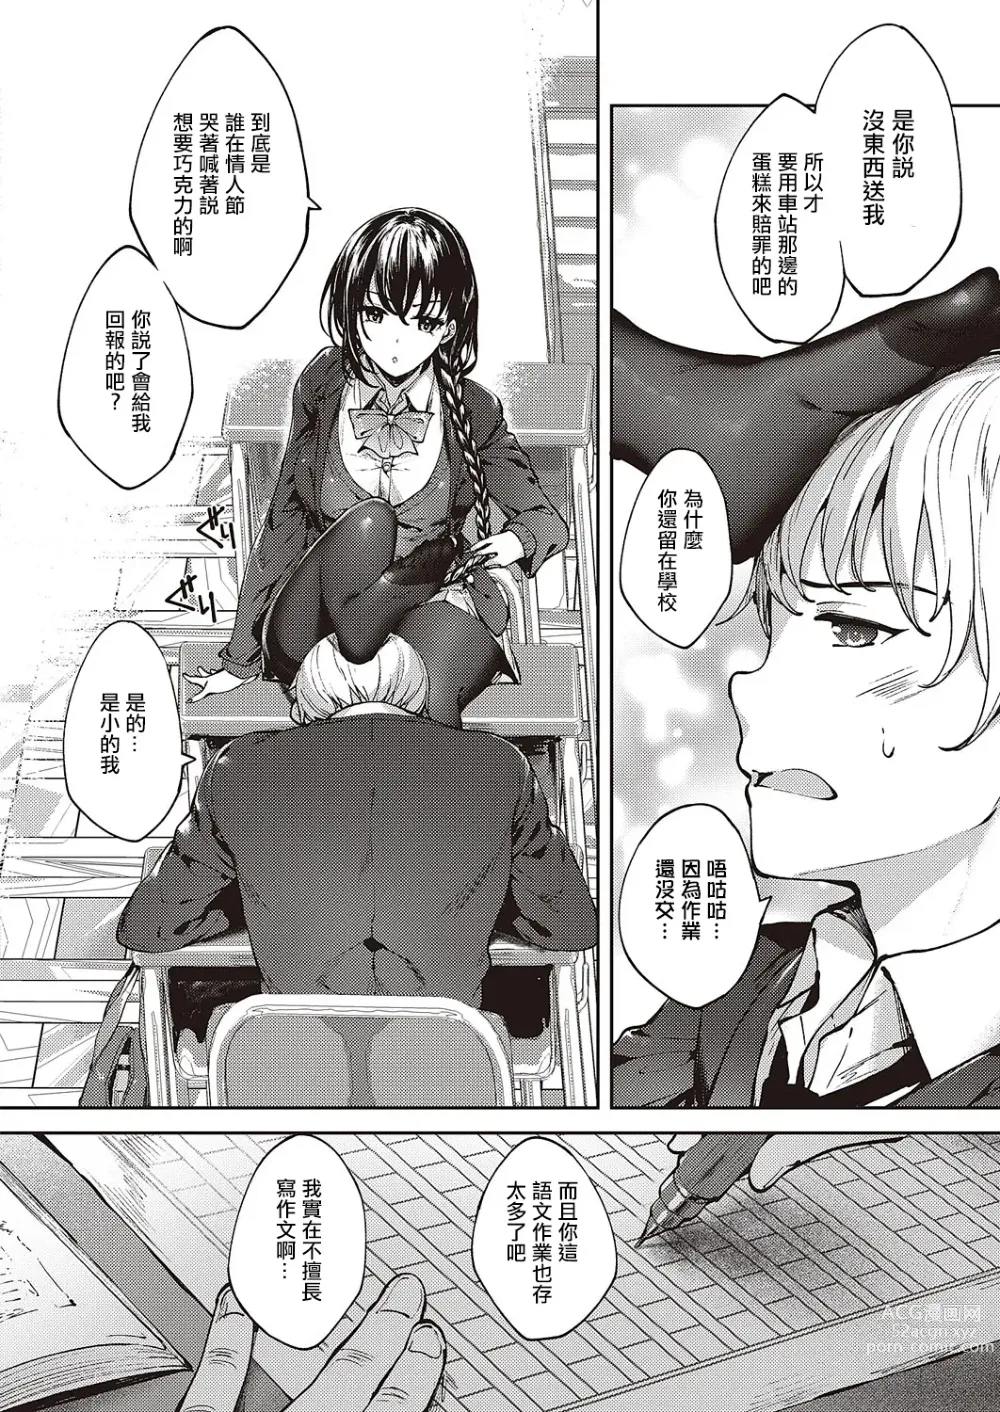 Page 6 of manga めぐりどころ 2歩